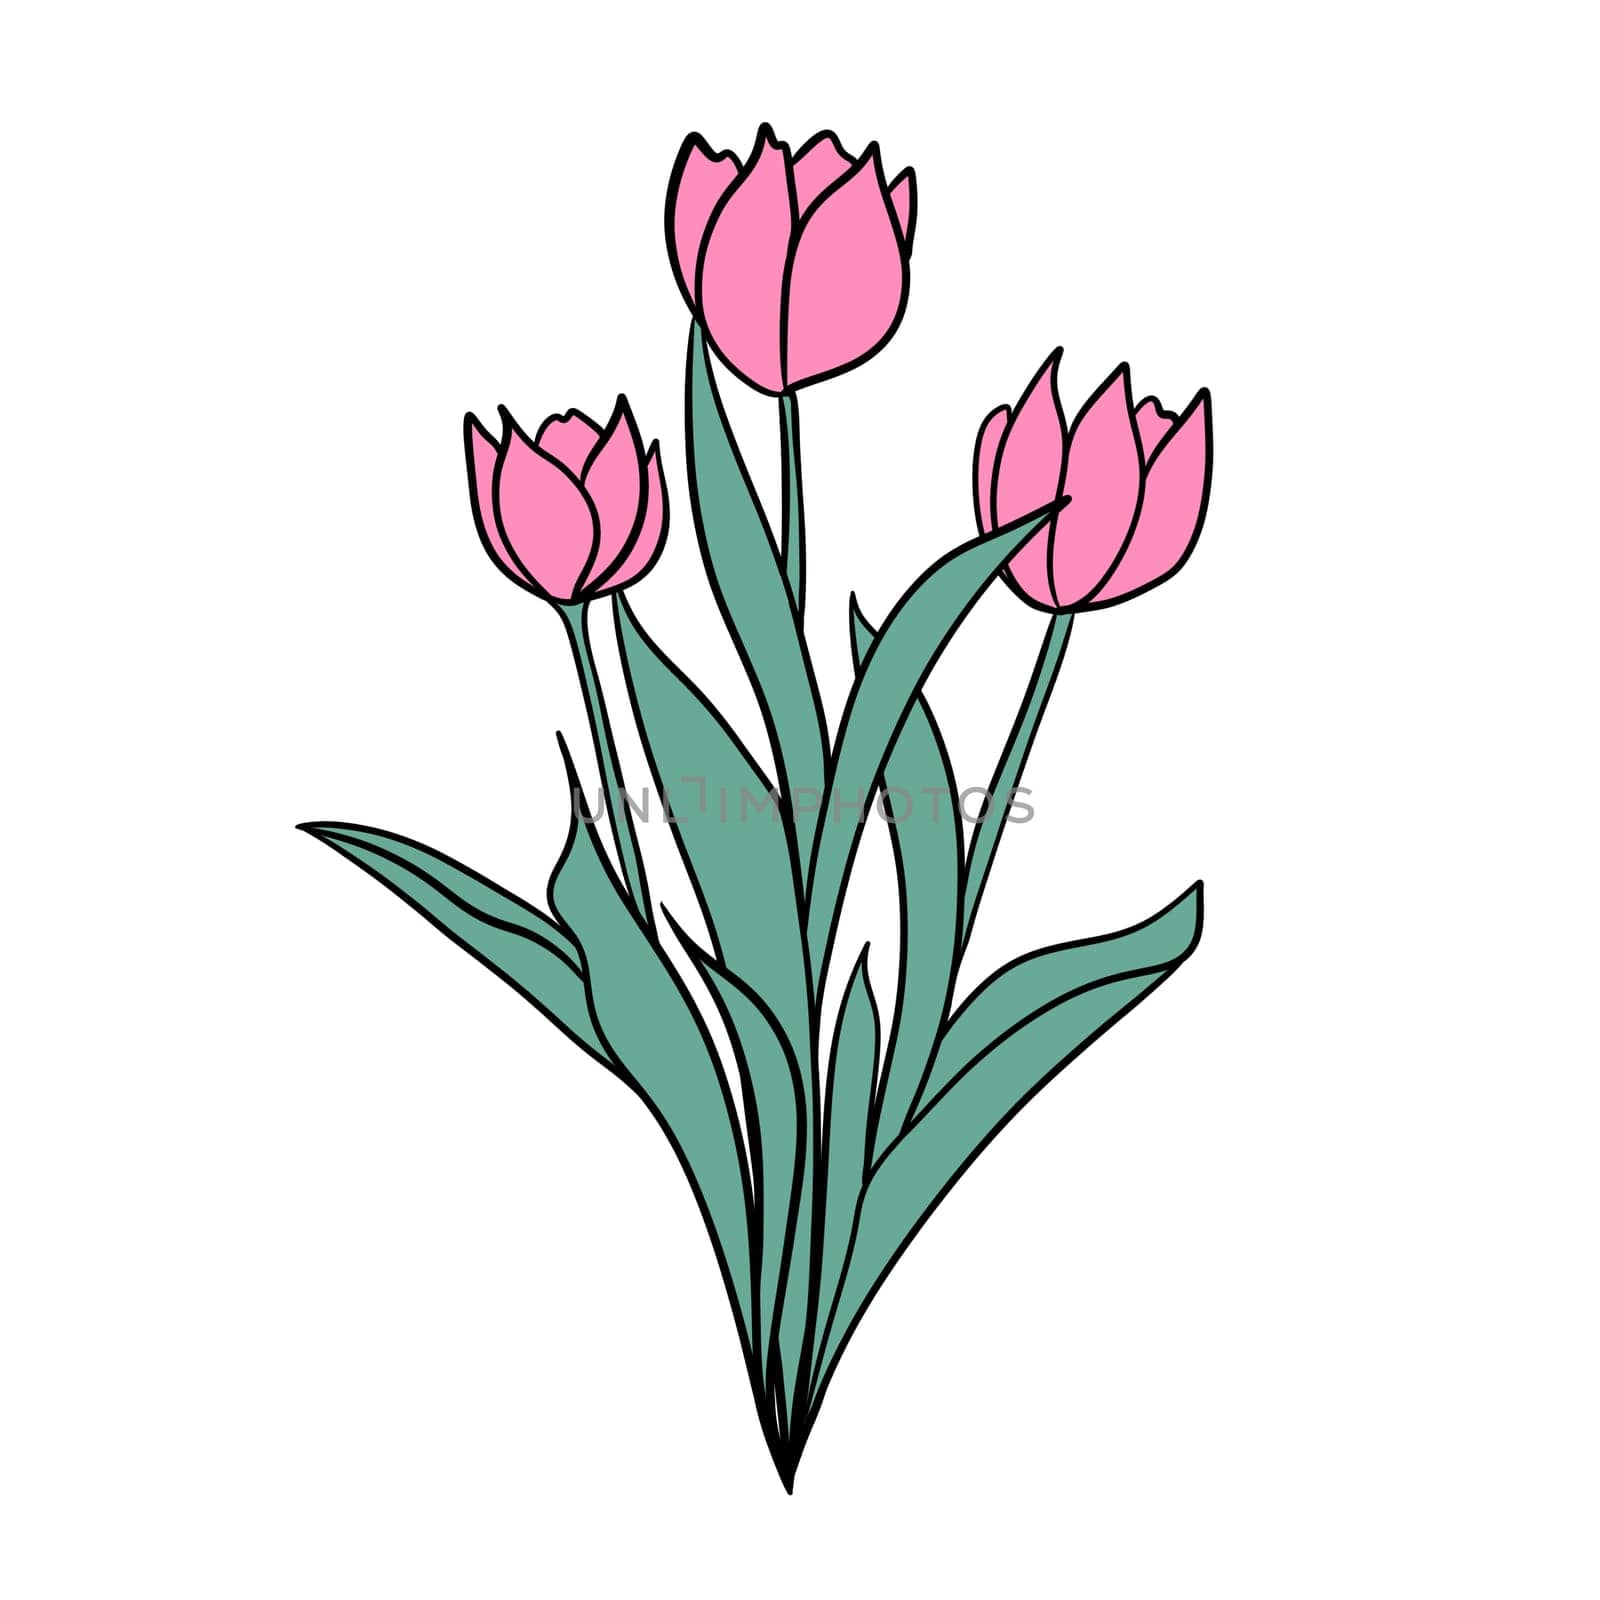 Hand drawn illsutration of two wild flowers rose tulip. Green leaves branch, pink flower floral petal blossom bloom. Spring summer elegant design. Three elegant flowers in bouquet, greeting print. by Lagmar